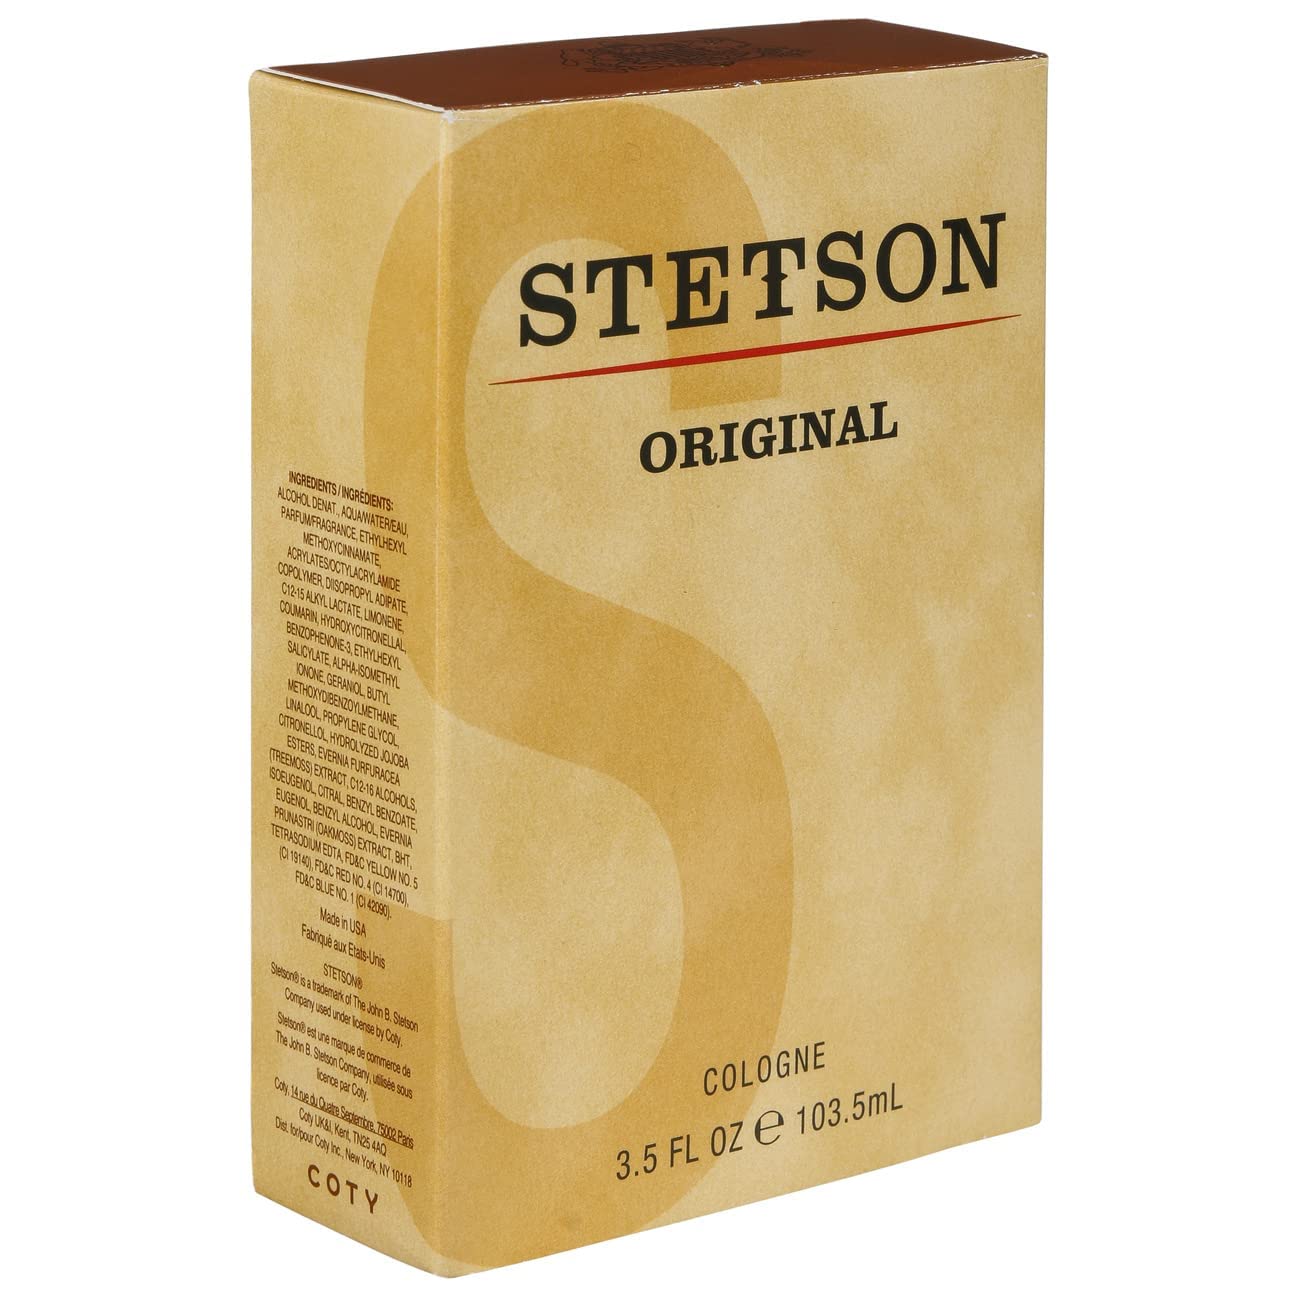 Stetson Original Cologne 3.5oz